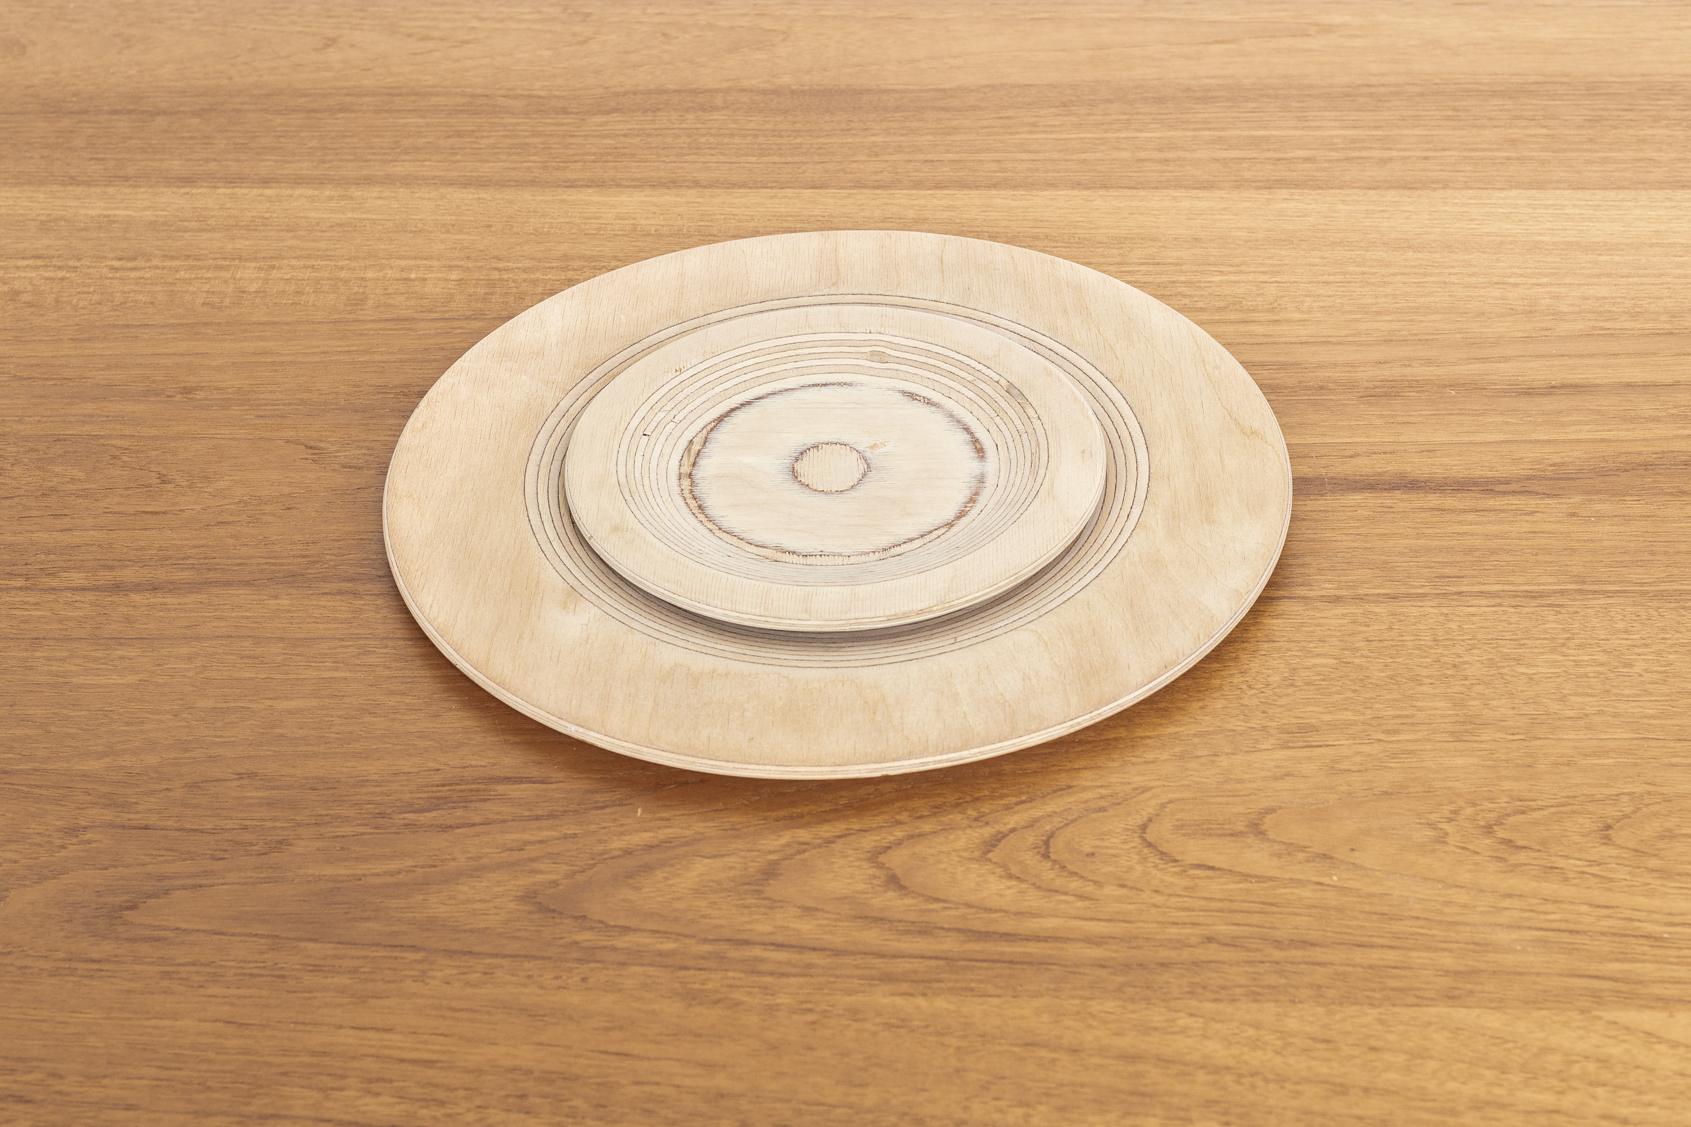 Midcentury Finnish Modern Wooden Plates by Saarinen for Keuruu 2